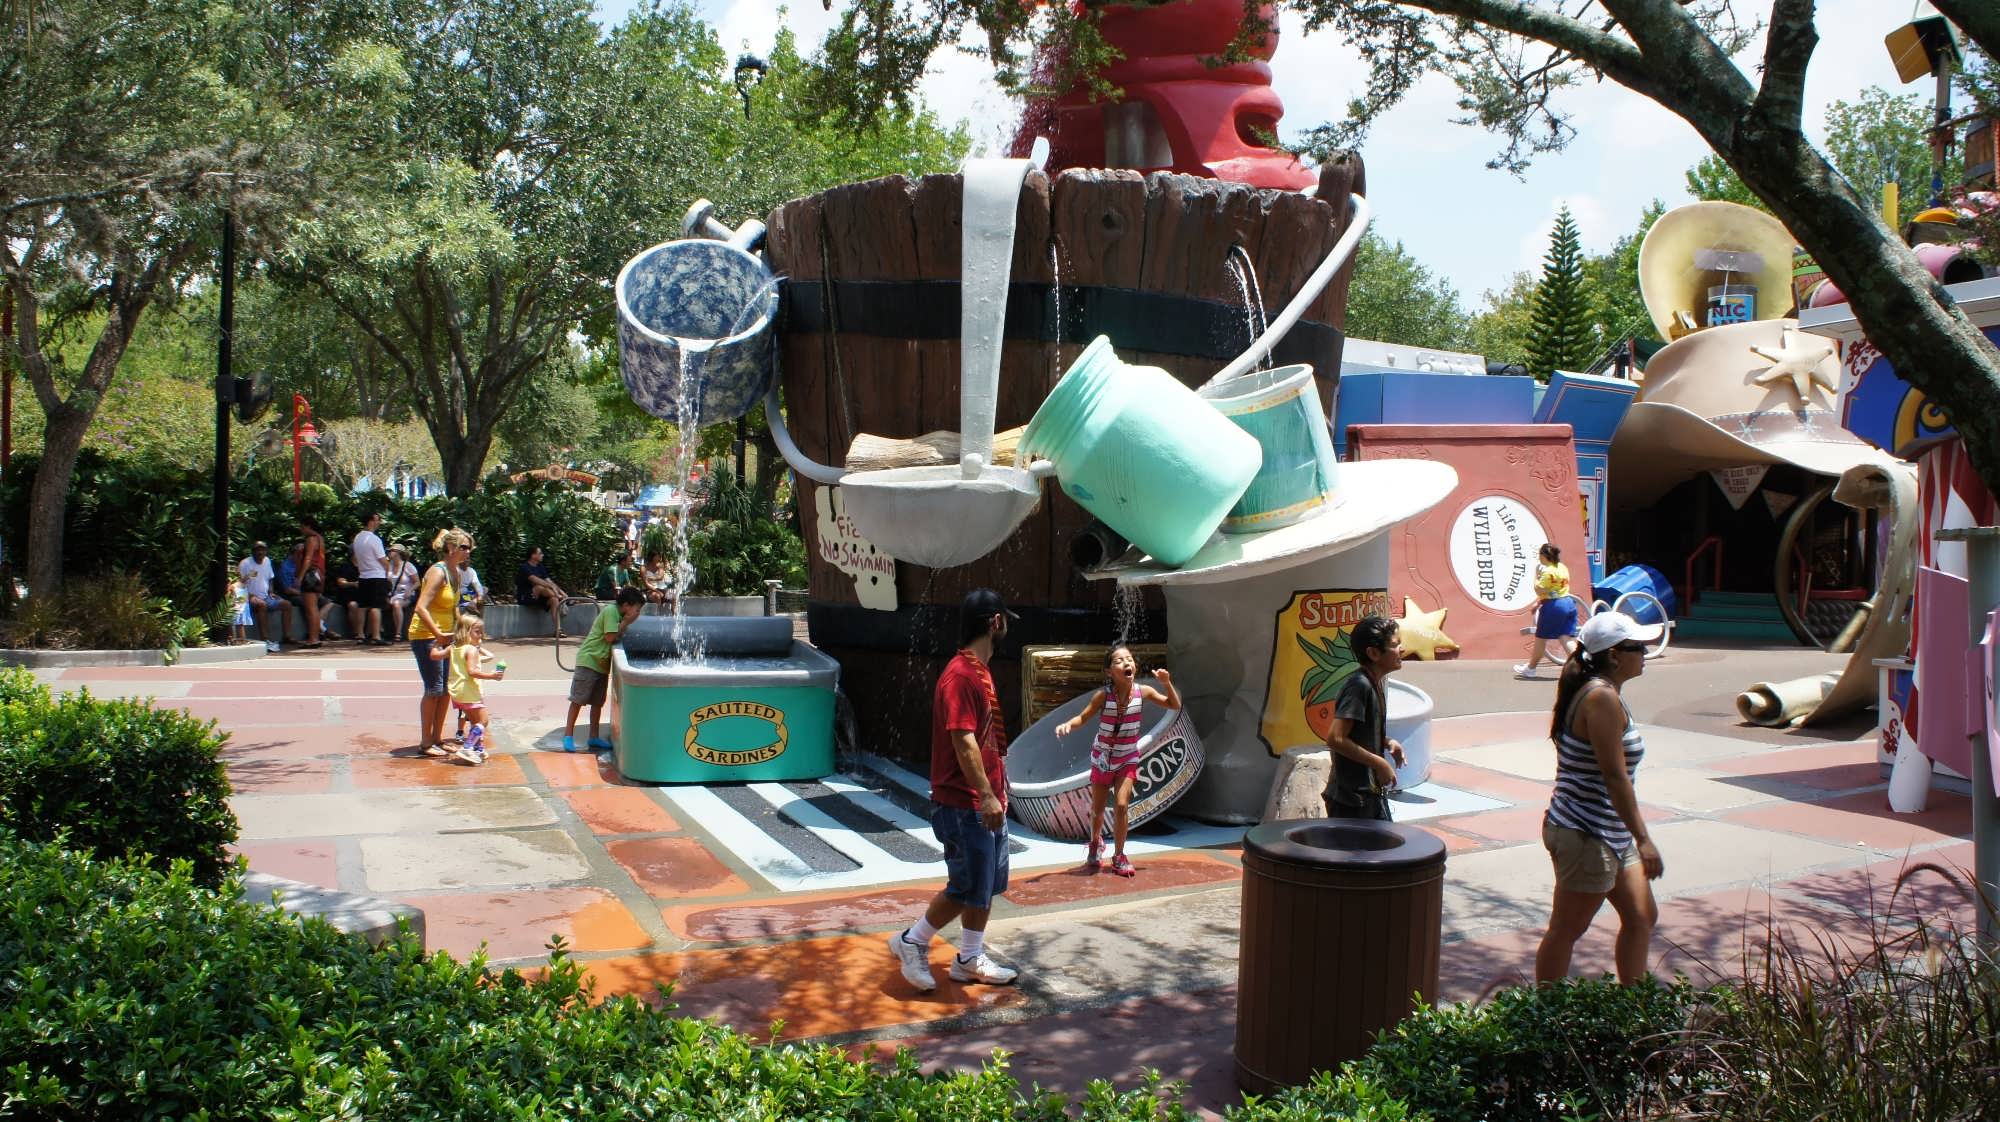 Fievel’s Playland at Universal Studios Florida